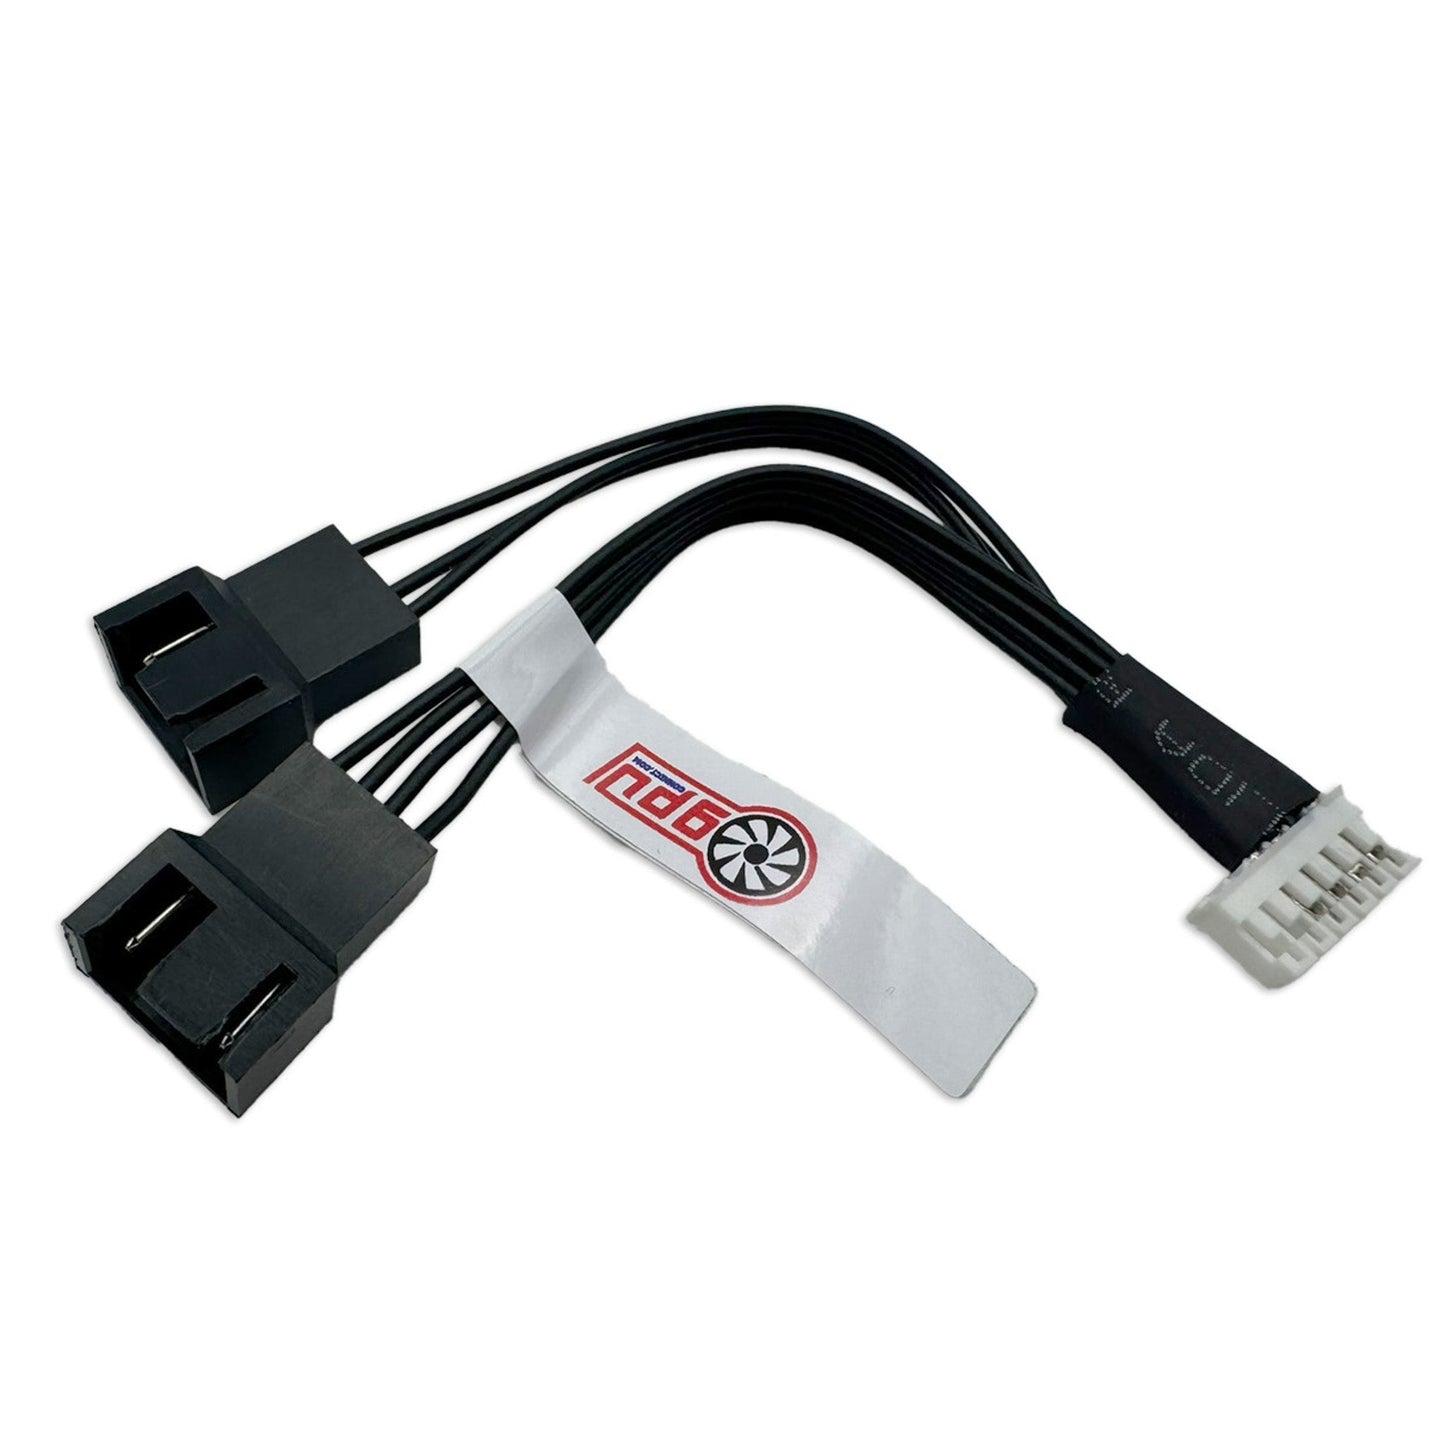 Asus GTX 980 1060 1070 1080 Ti STRIX 6 Pin PWM Adapter Deshroud Cable - GPUCONNECT.COM